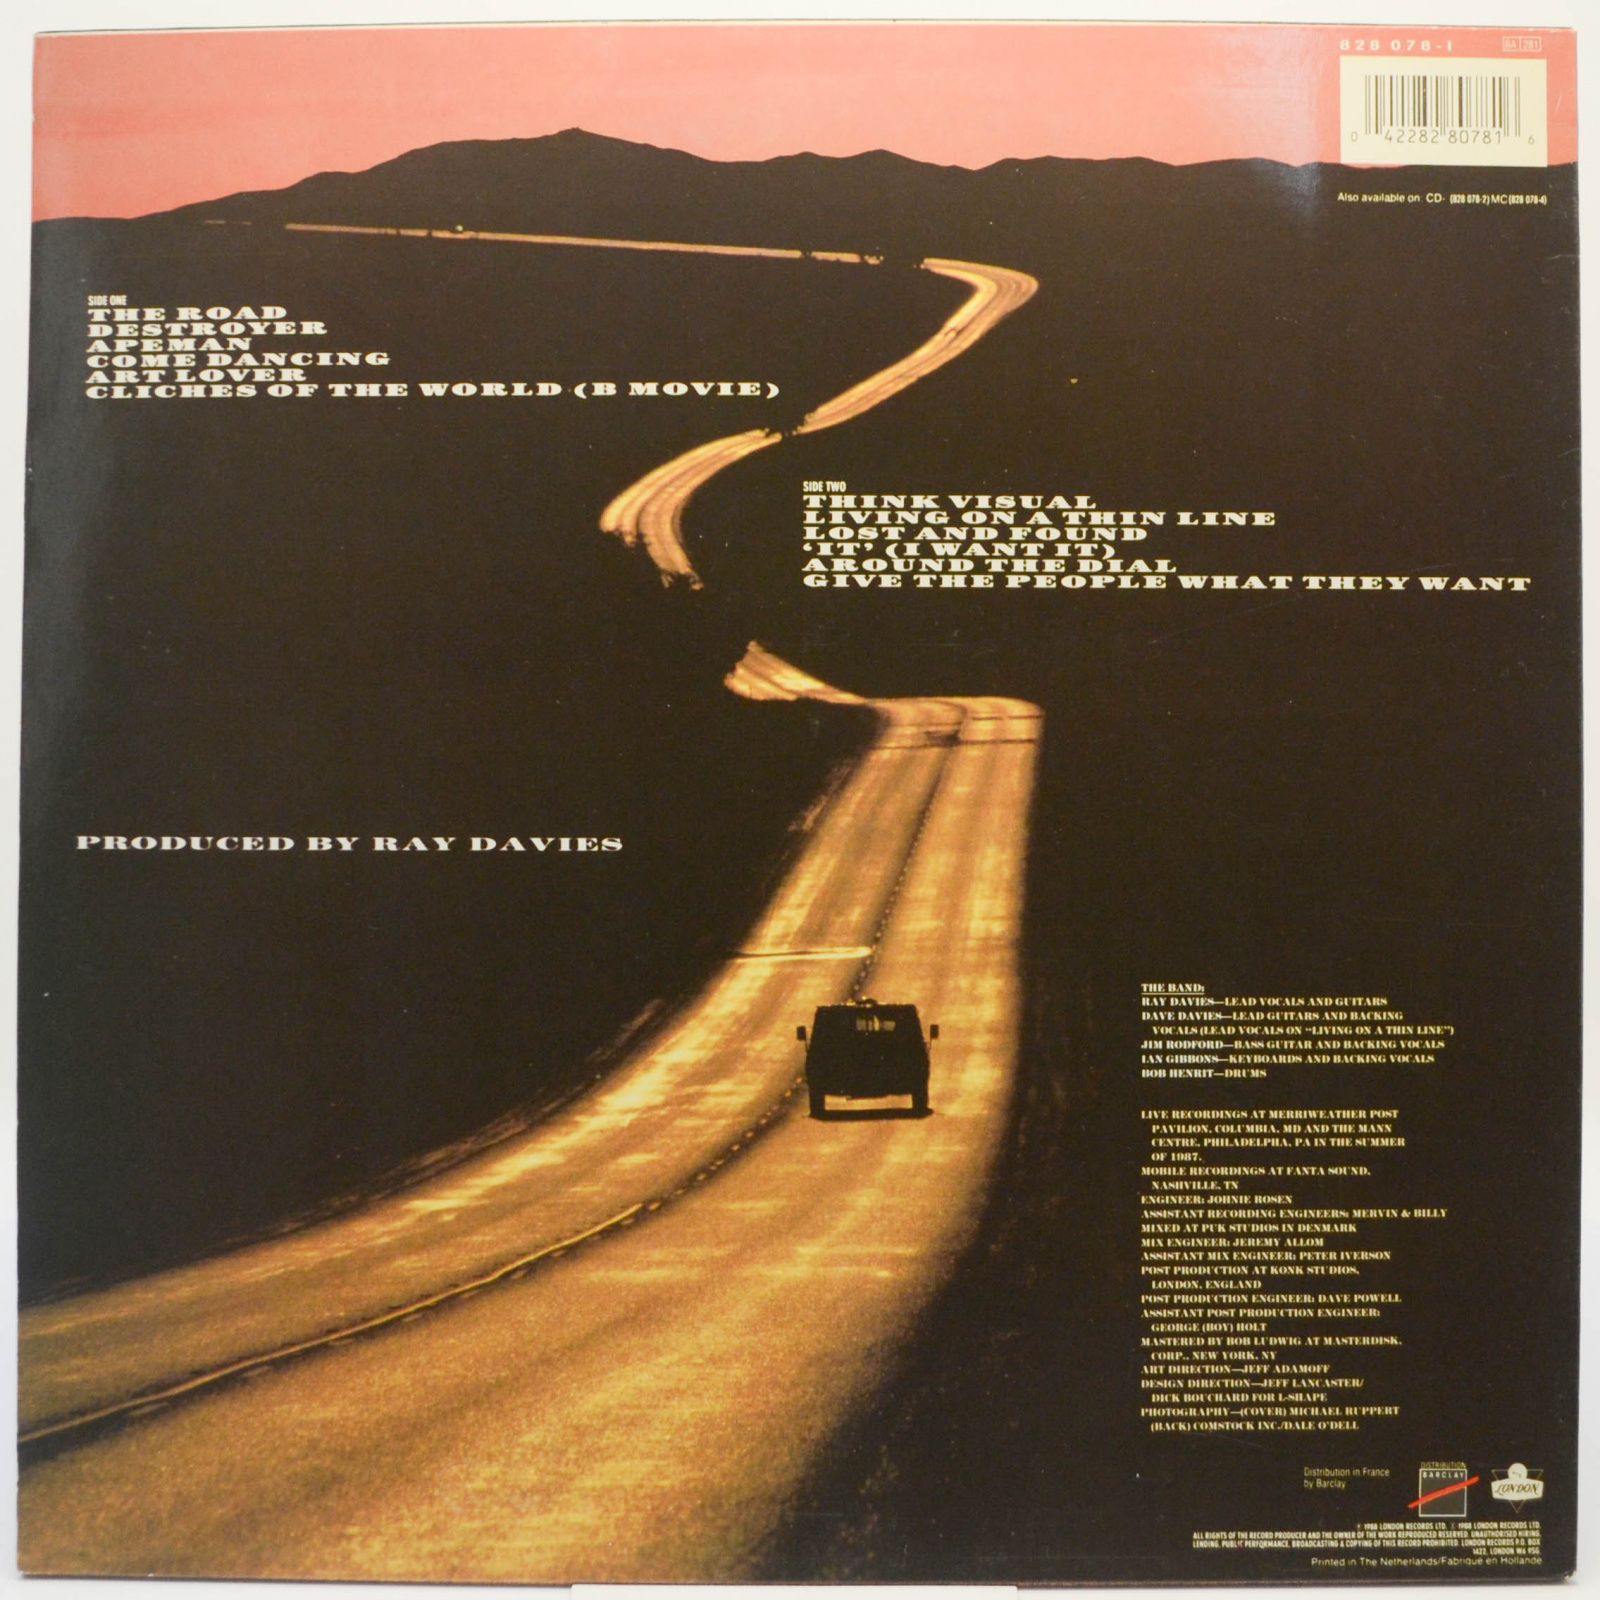 Kinks — The Road, 1988